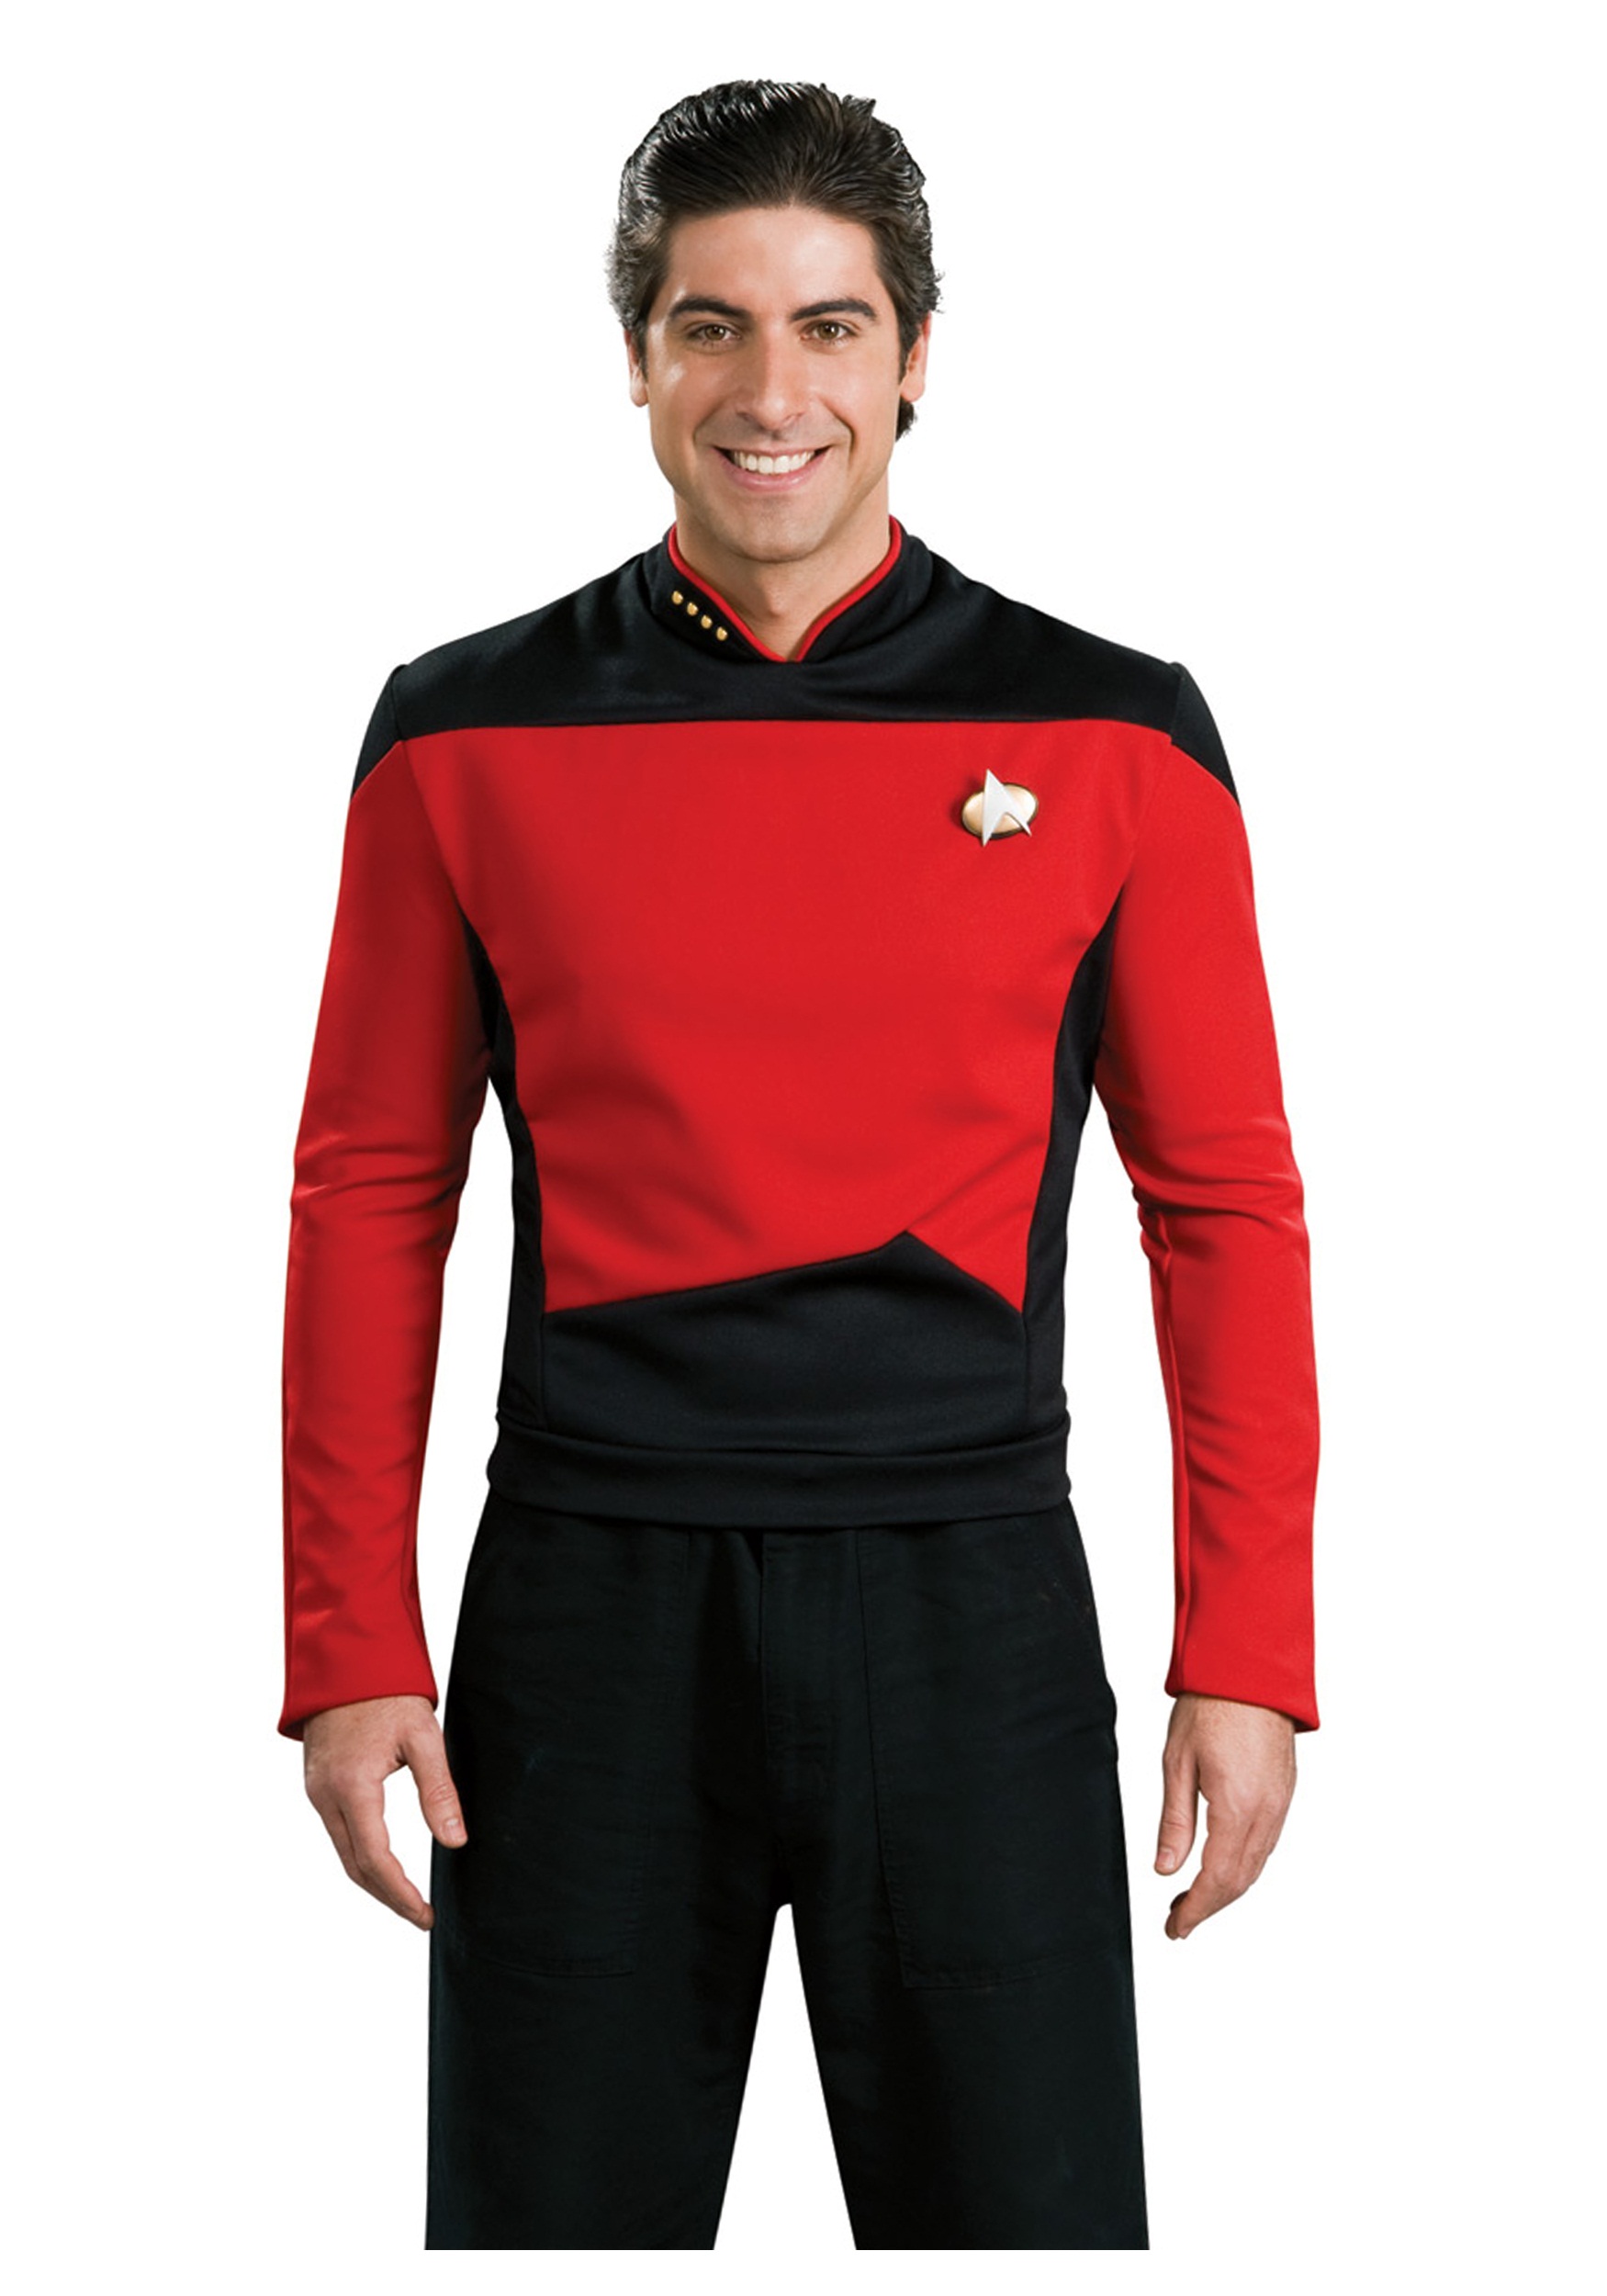 star-trek-tng-adult-deluxe-commander-uniform.jpg